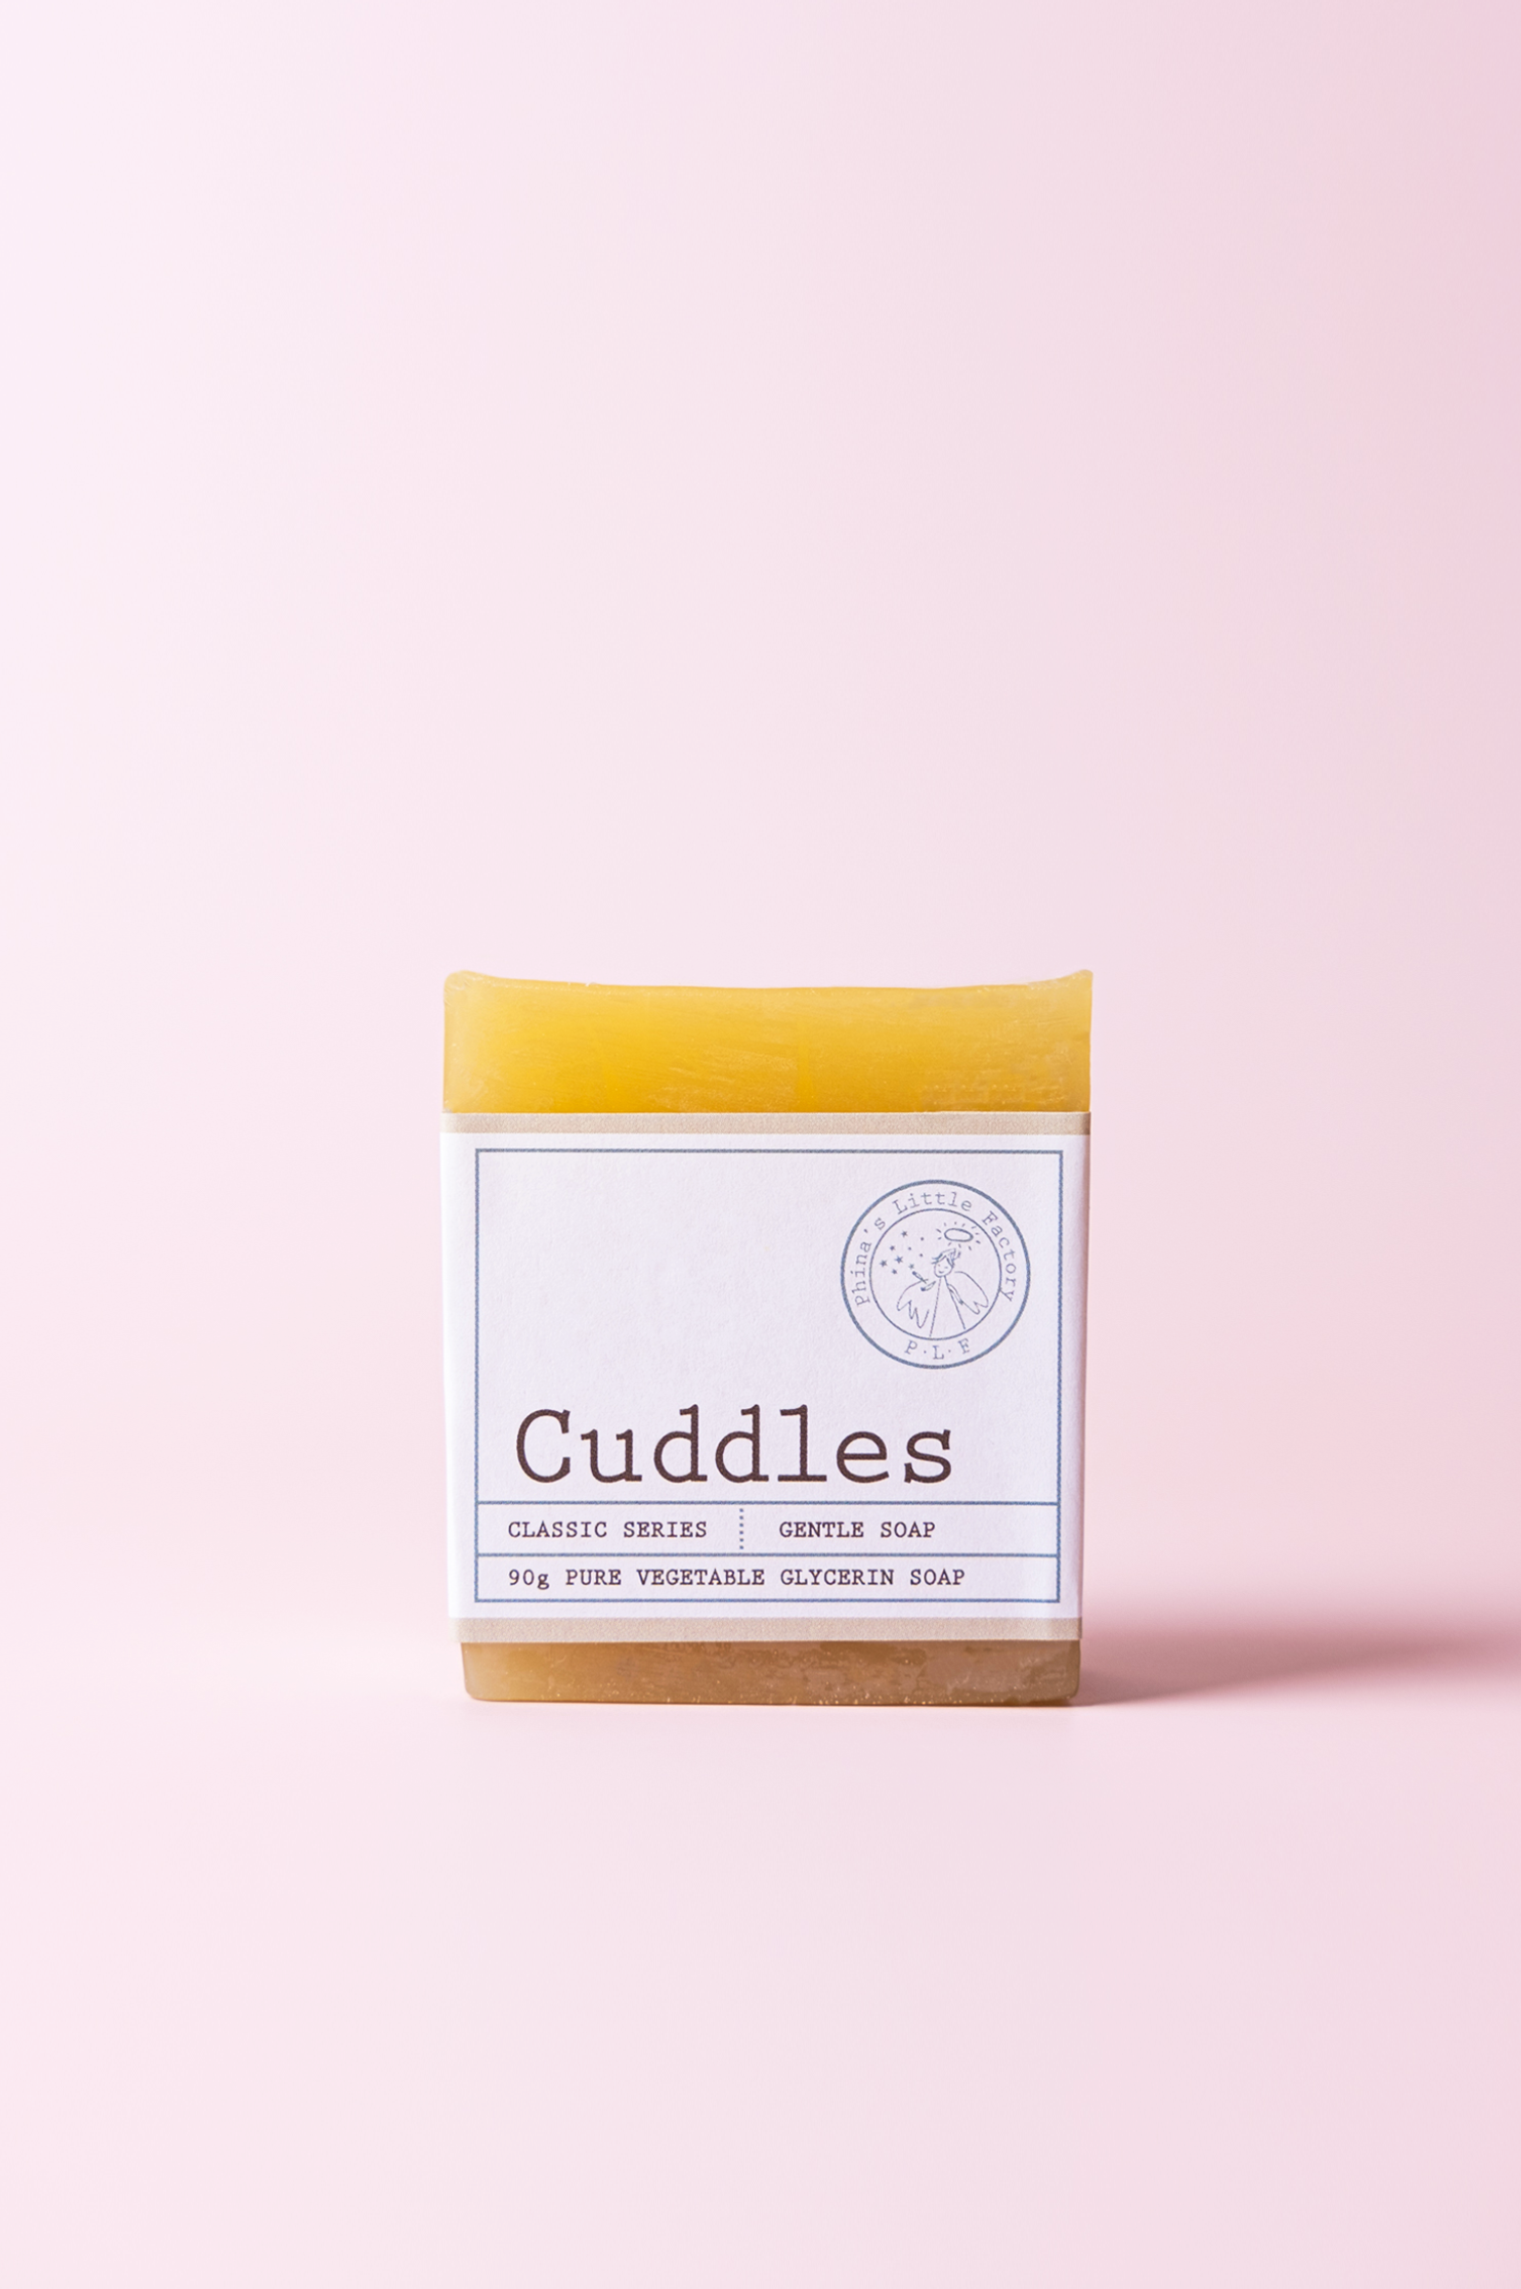 Cuddles Gentle Soap